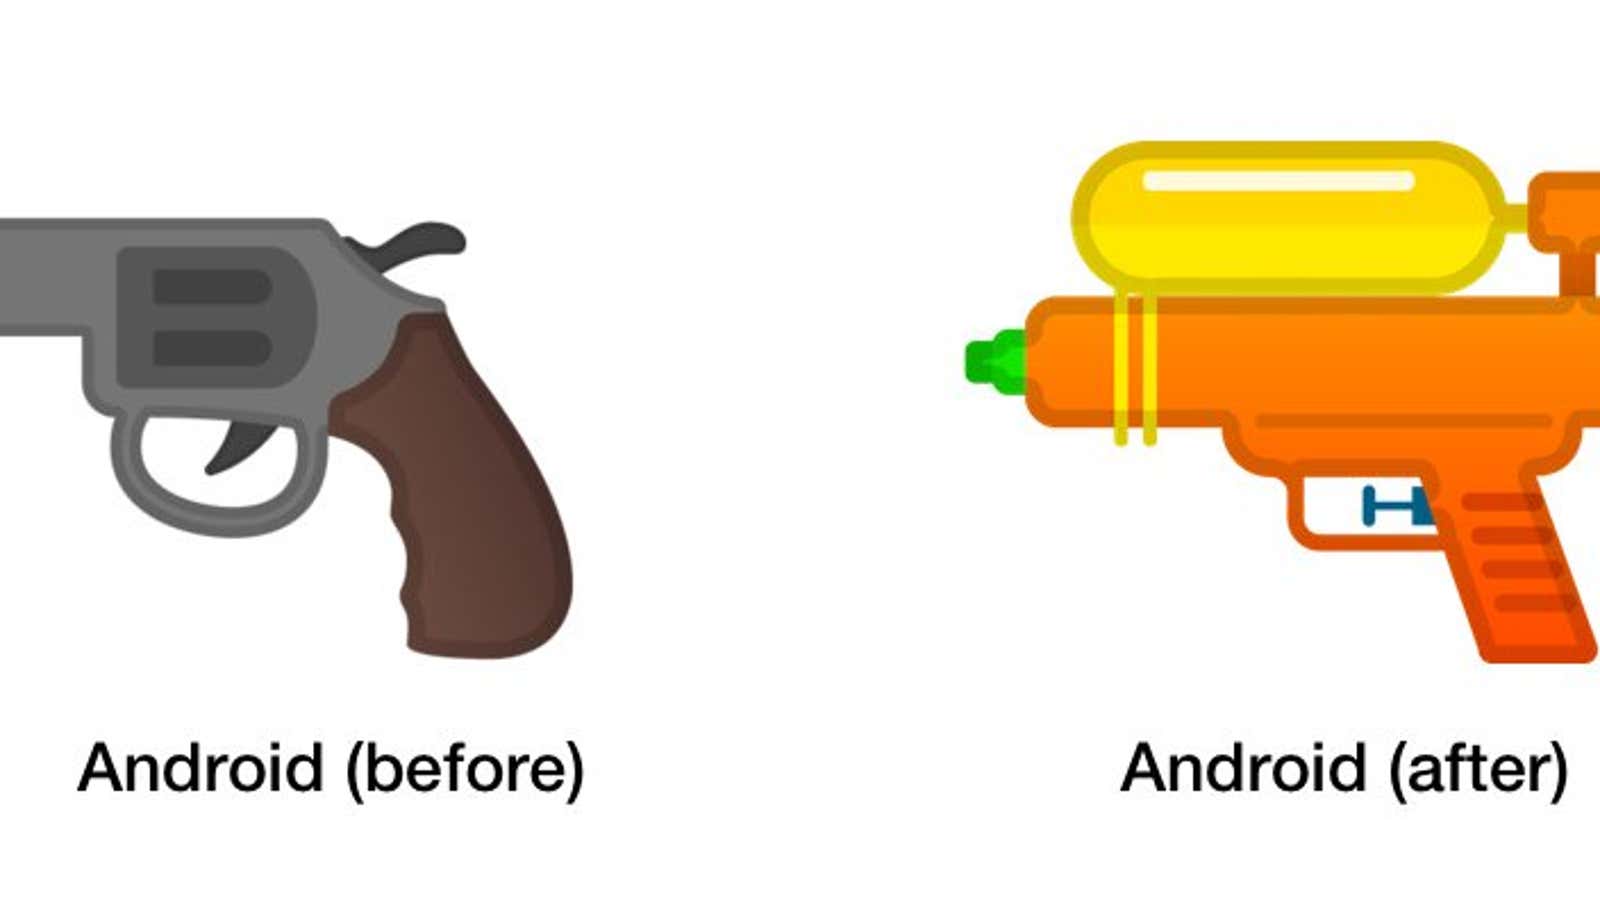 All the big tech companies are ditching their handgun emojis for toy guns